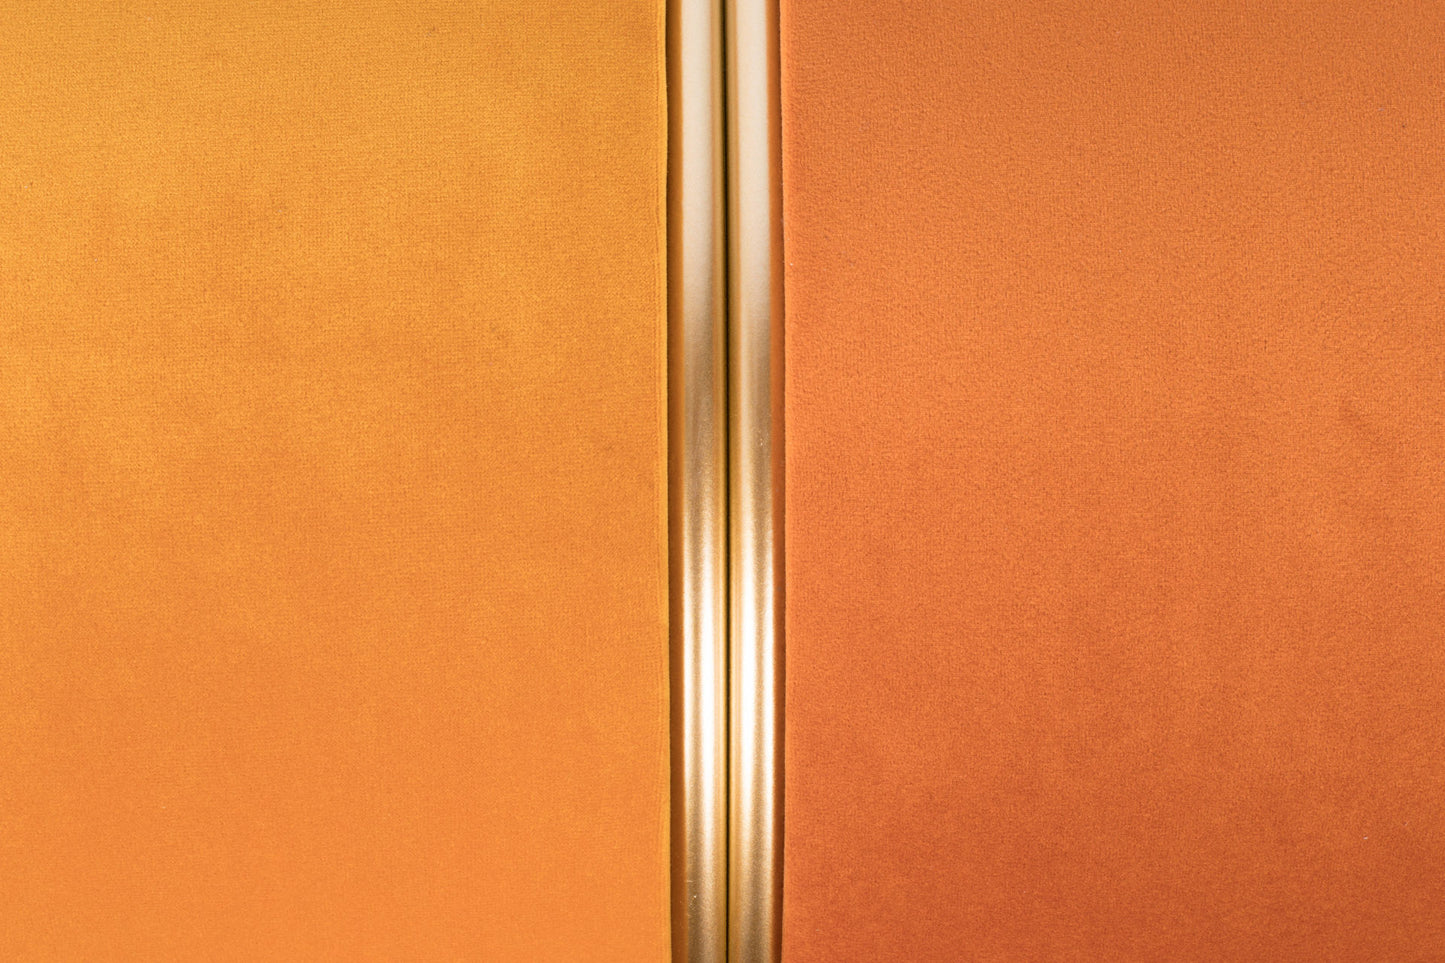 Tabouret Nancy's Malverne - Rétro - Orange - Polyester, Acier, MDF - 35 cm x 35 cm x 39 cm